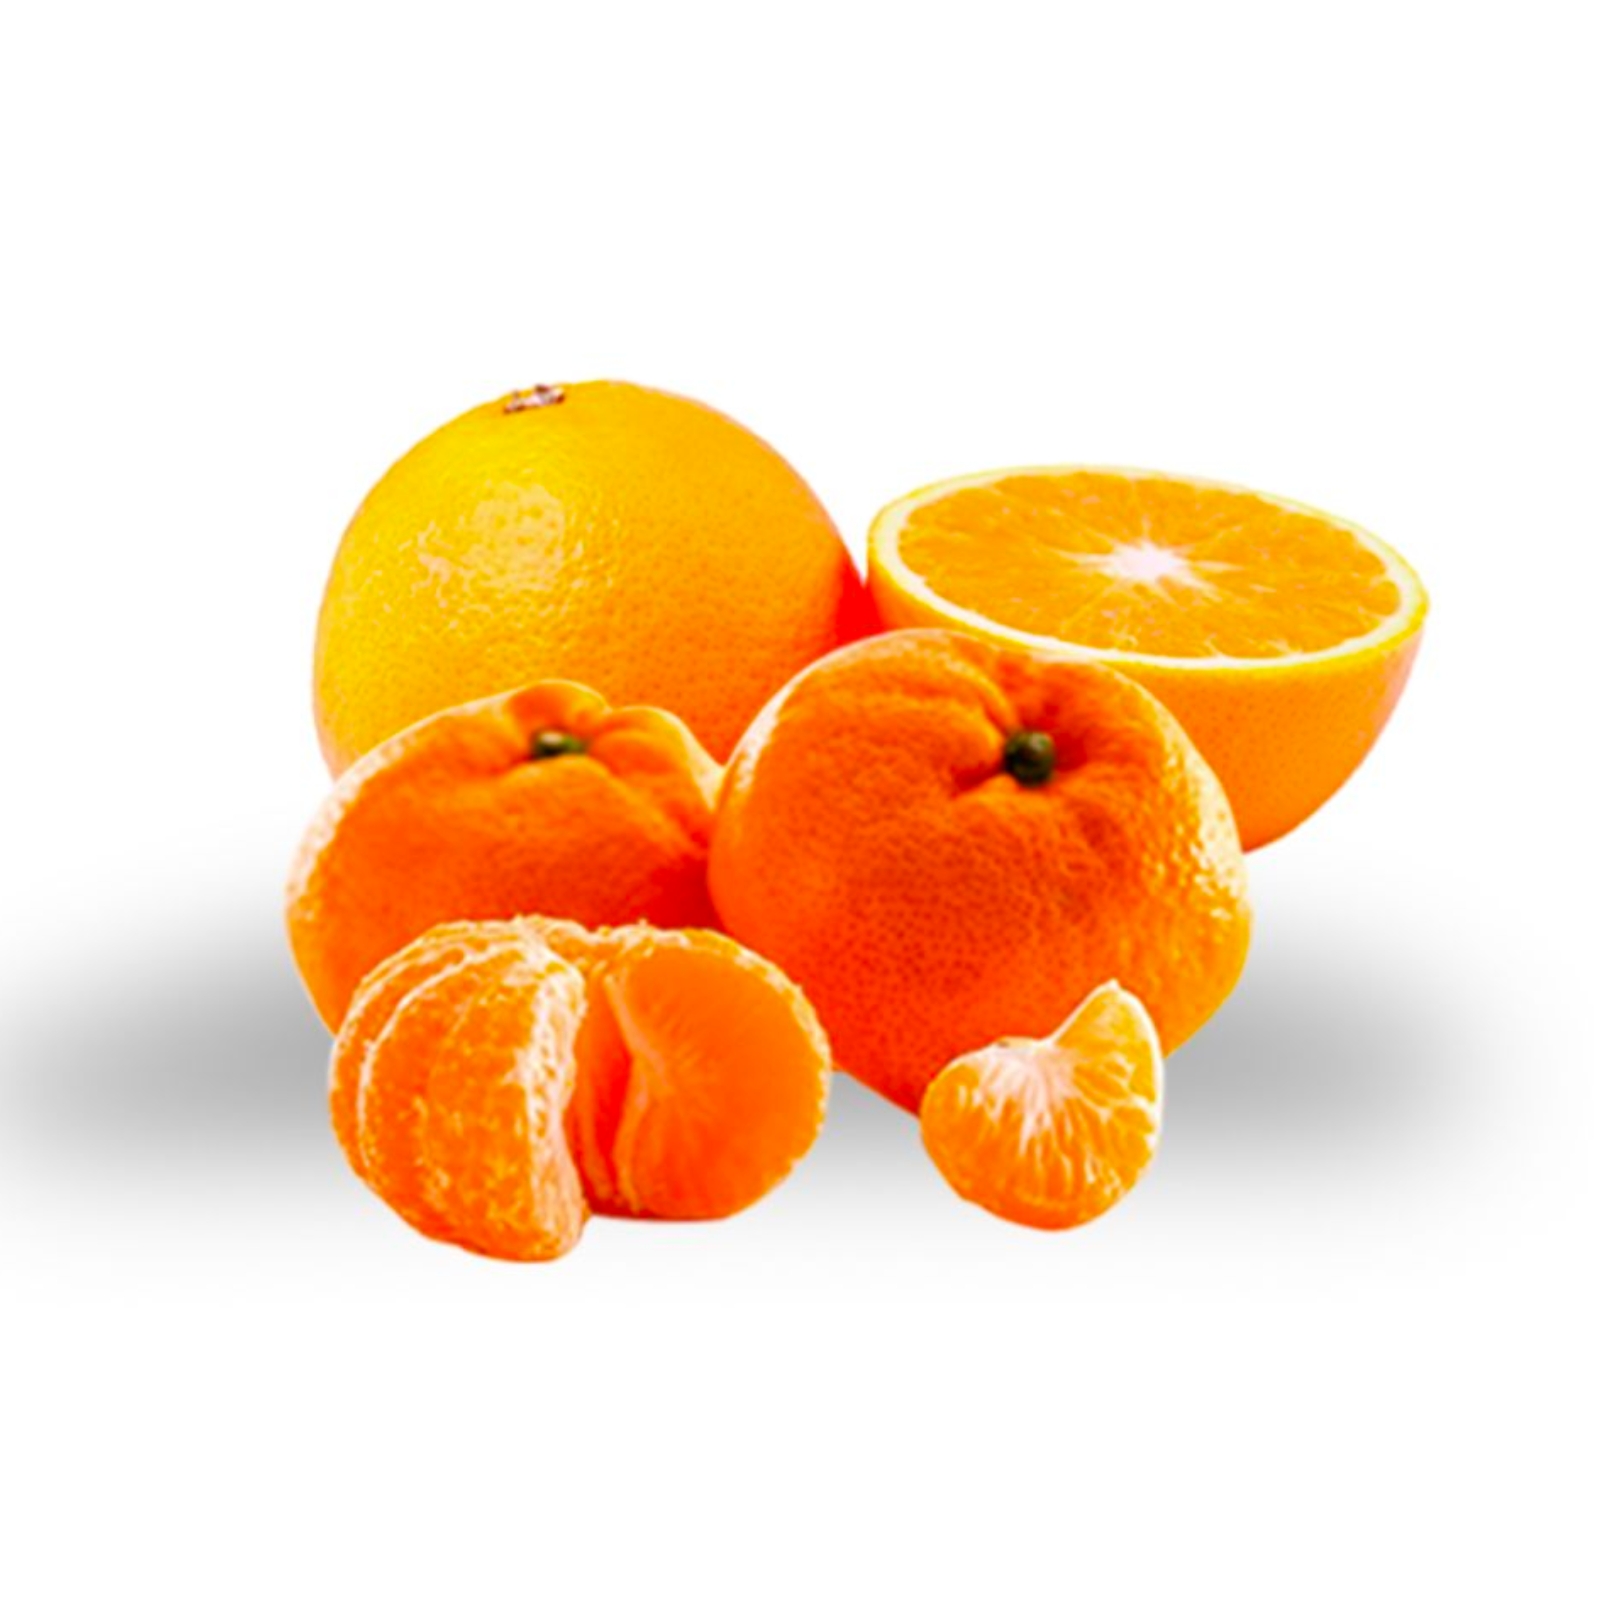 Buy Orange Mandarin Online NZ